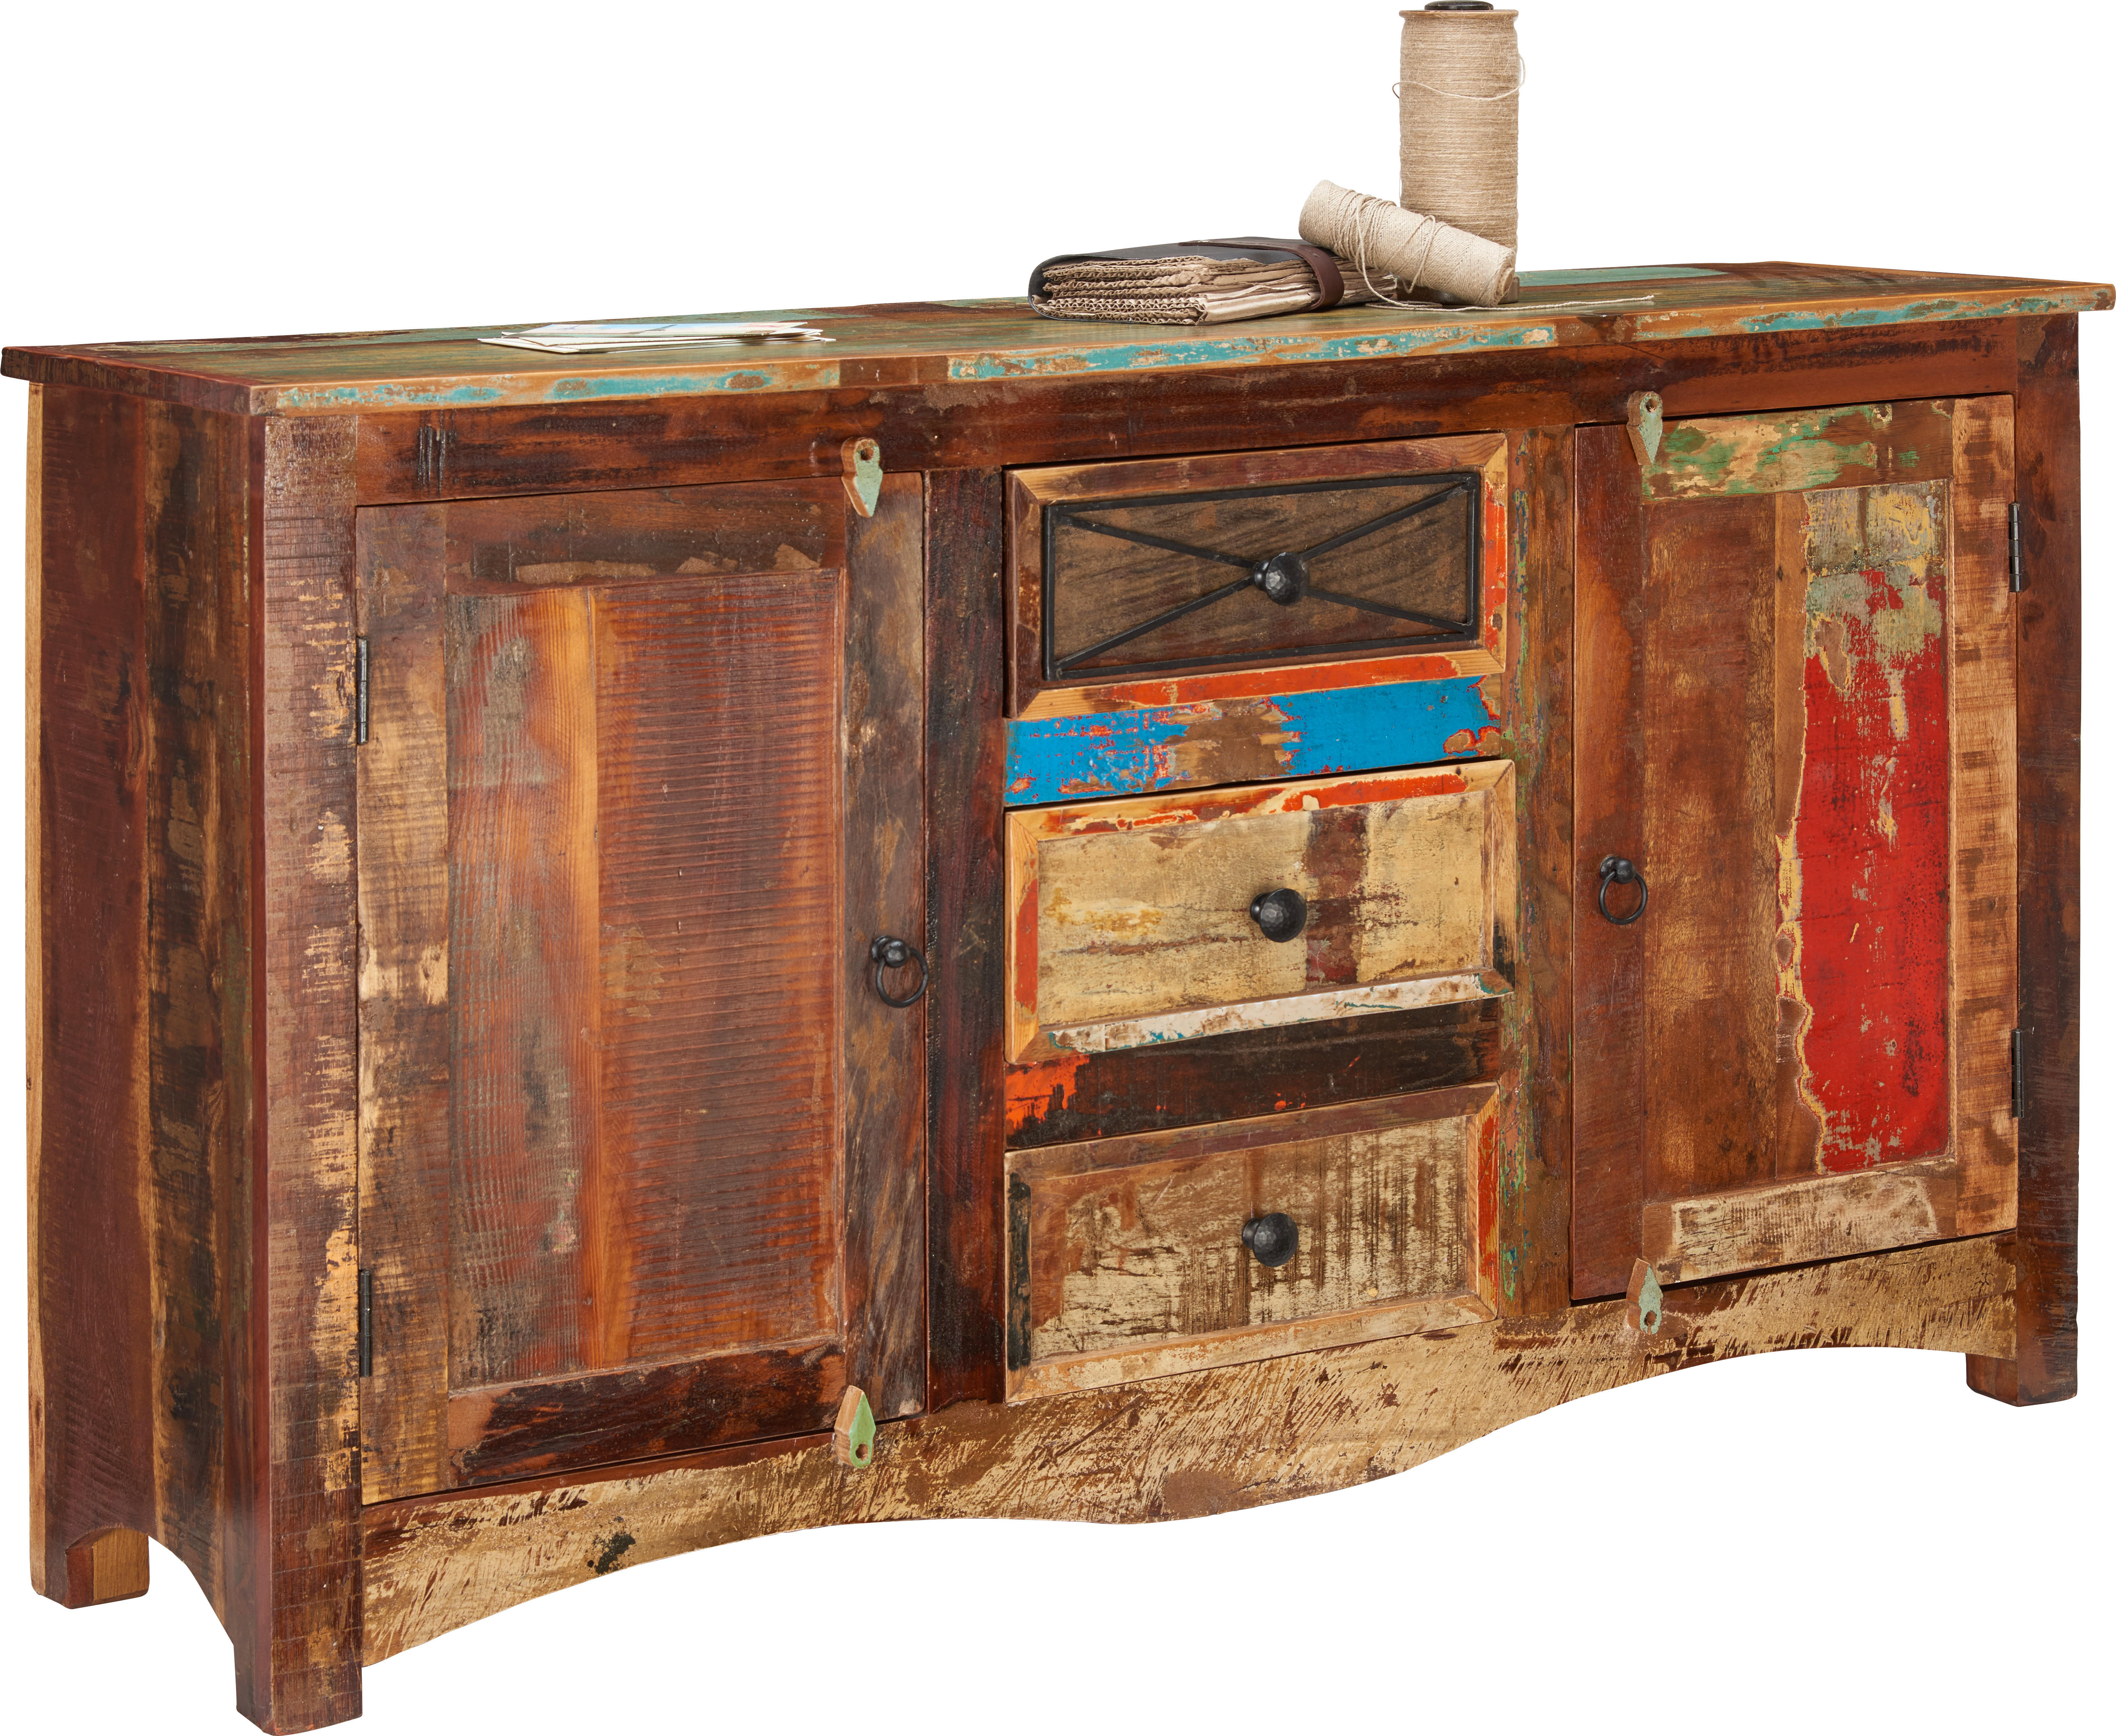 KOMODA, recyklované dřevo, vícebarevná, 150/85/40 cm - vícebarevná/hnědá, Lifestyle, kov/dřevo (150/85/40cm) - Ambia Home